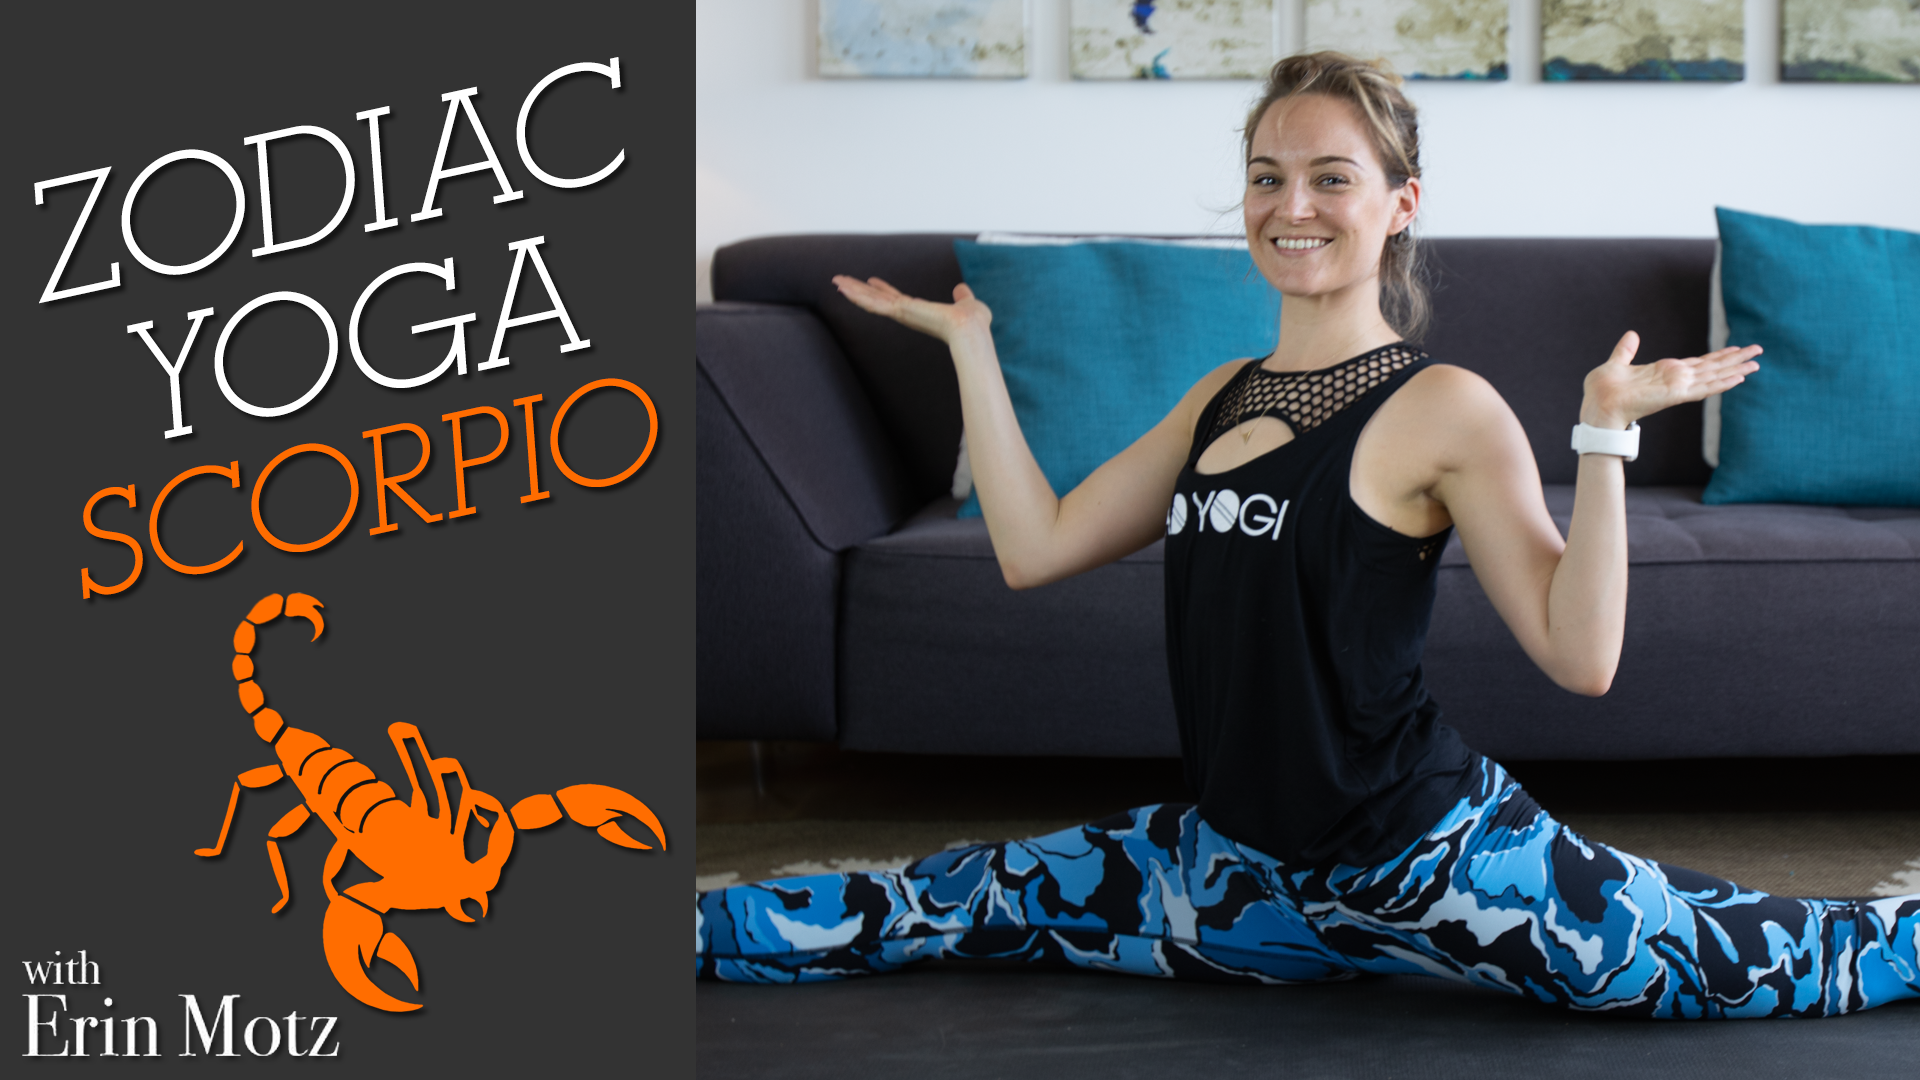 zodiac yoga scorpio